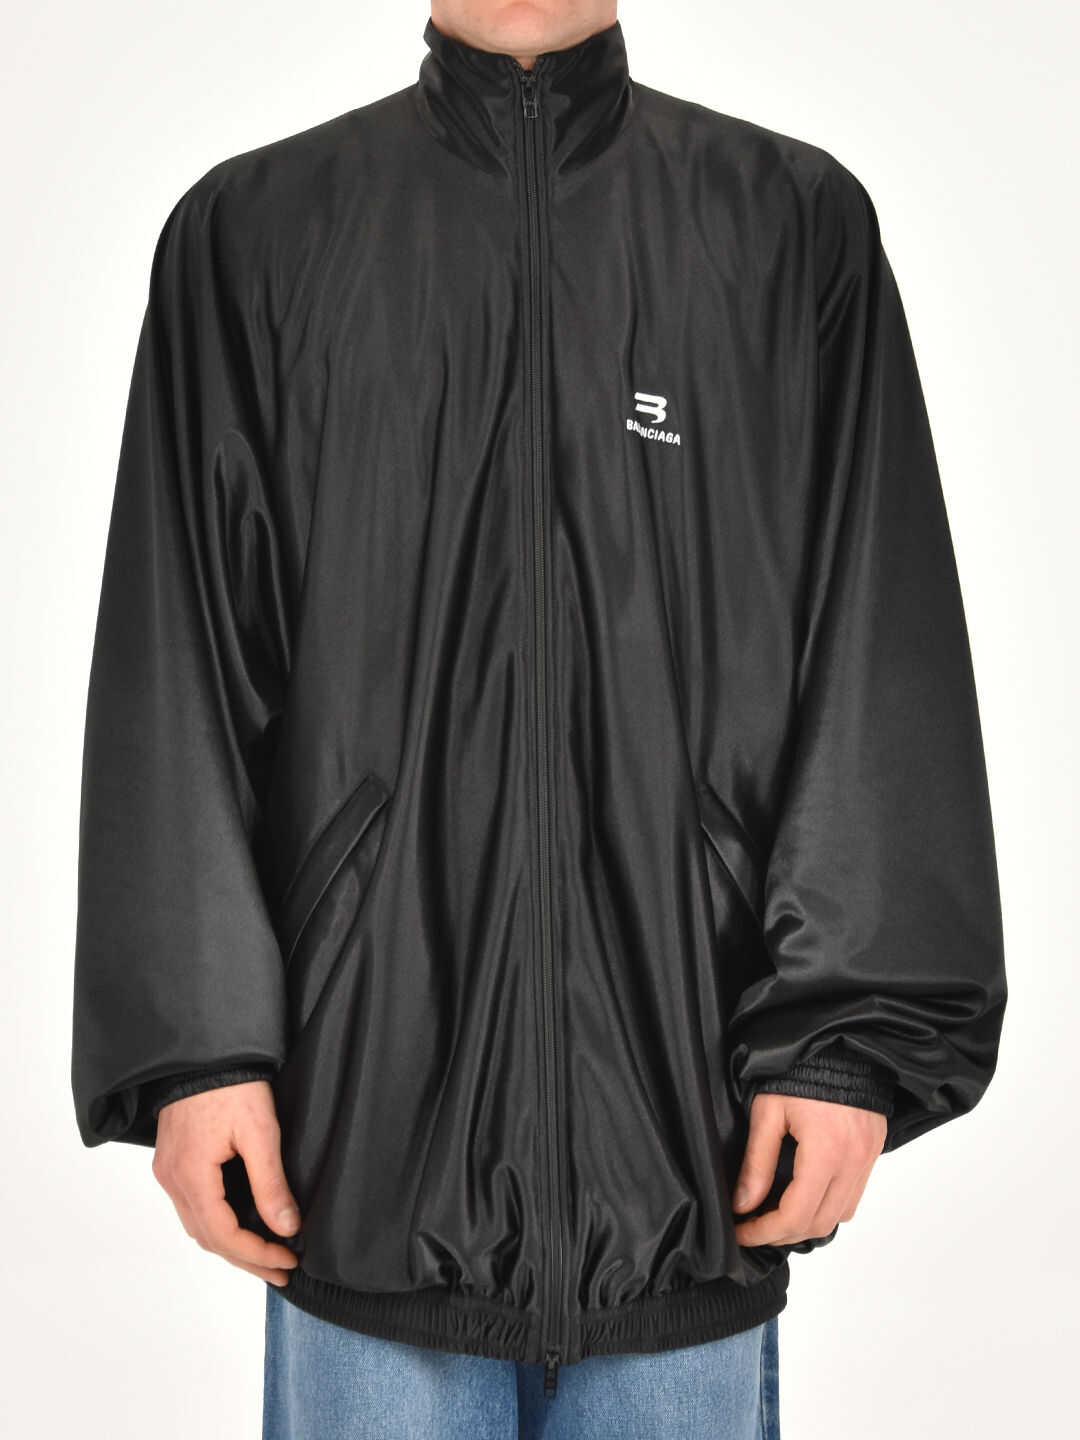 Balenciaga Shiny Tracksuit Jacket 659071 TJV20 Black